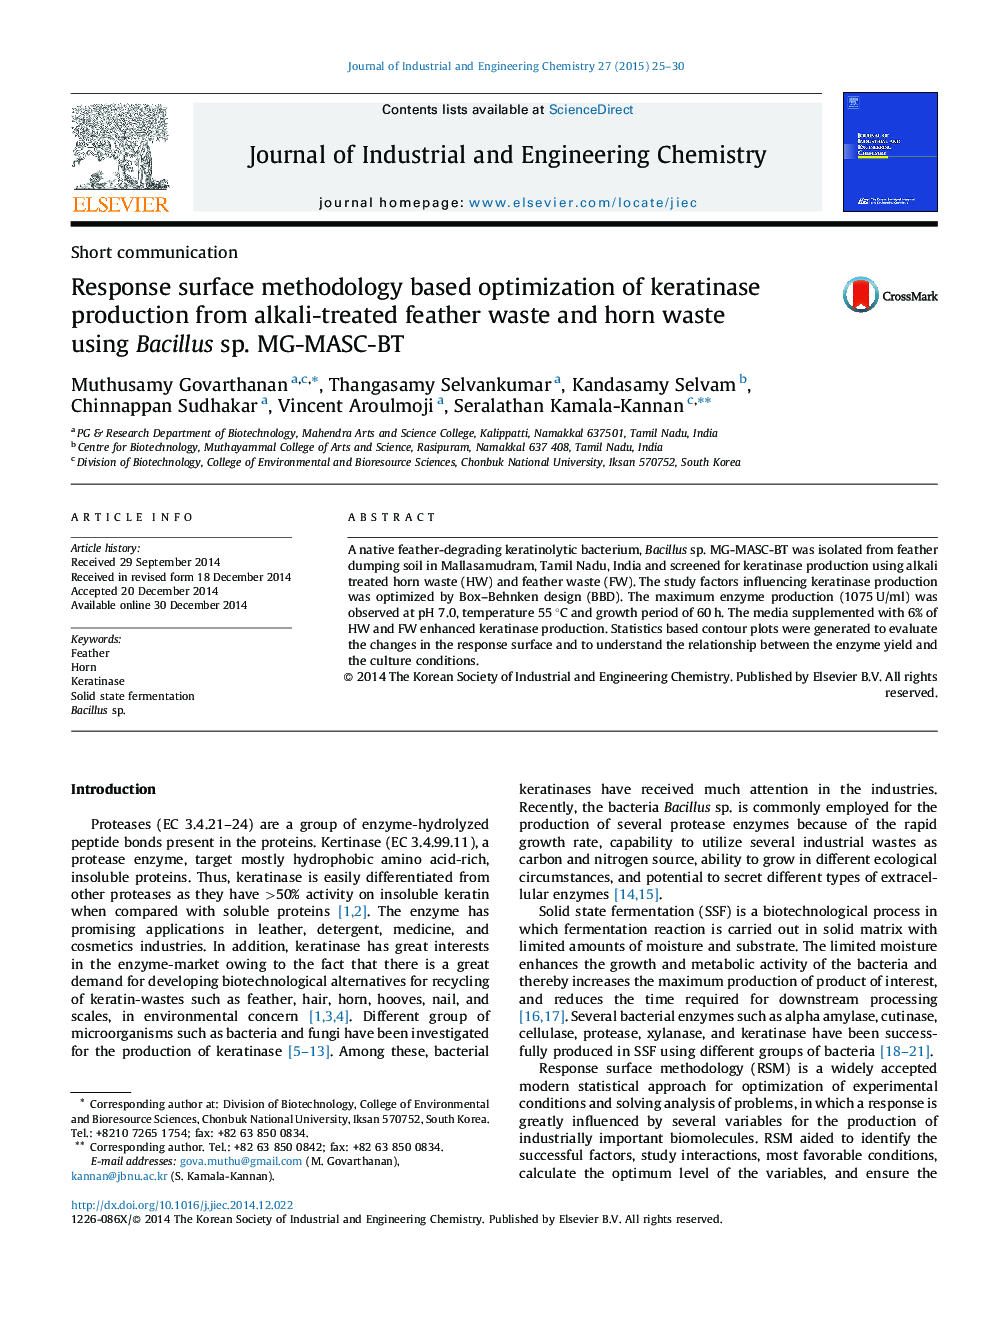 Response surface methodology based optimization of keratinase production from alkali-treated feather waste and horn waste using Bacillus sp. MG-MASC-BT